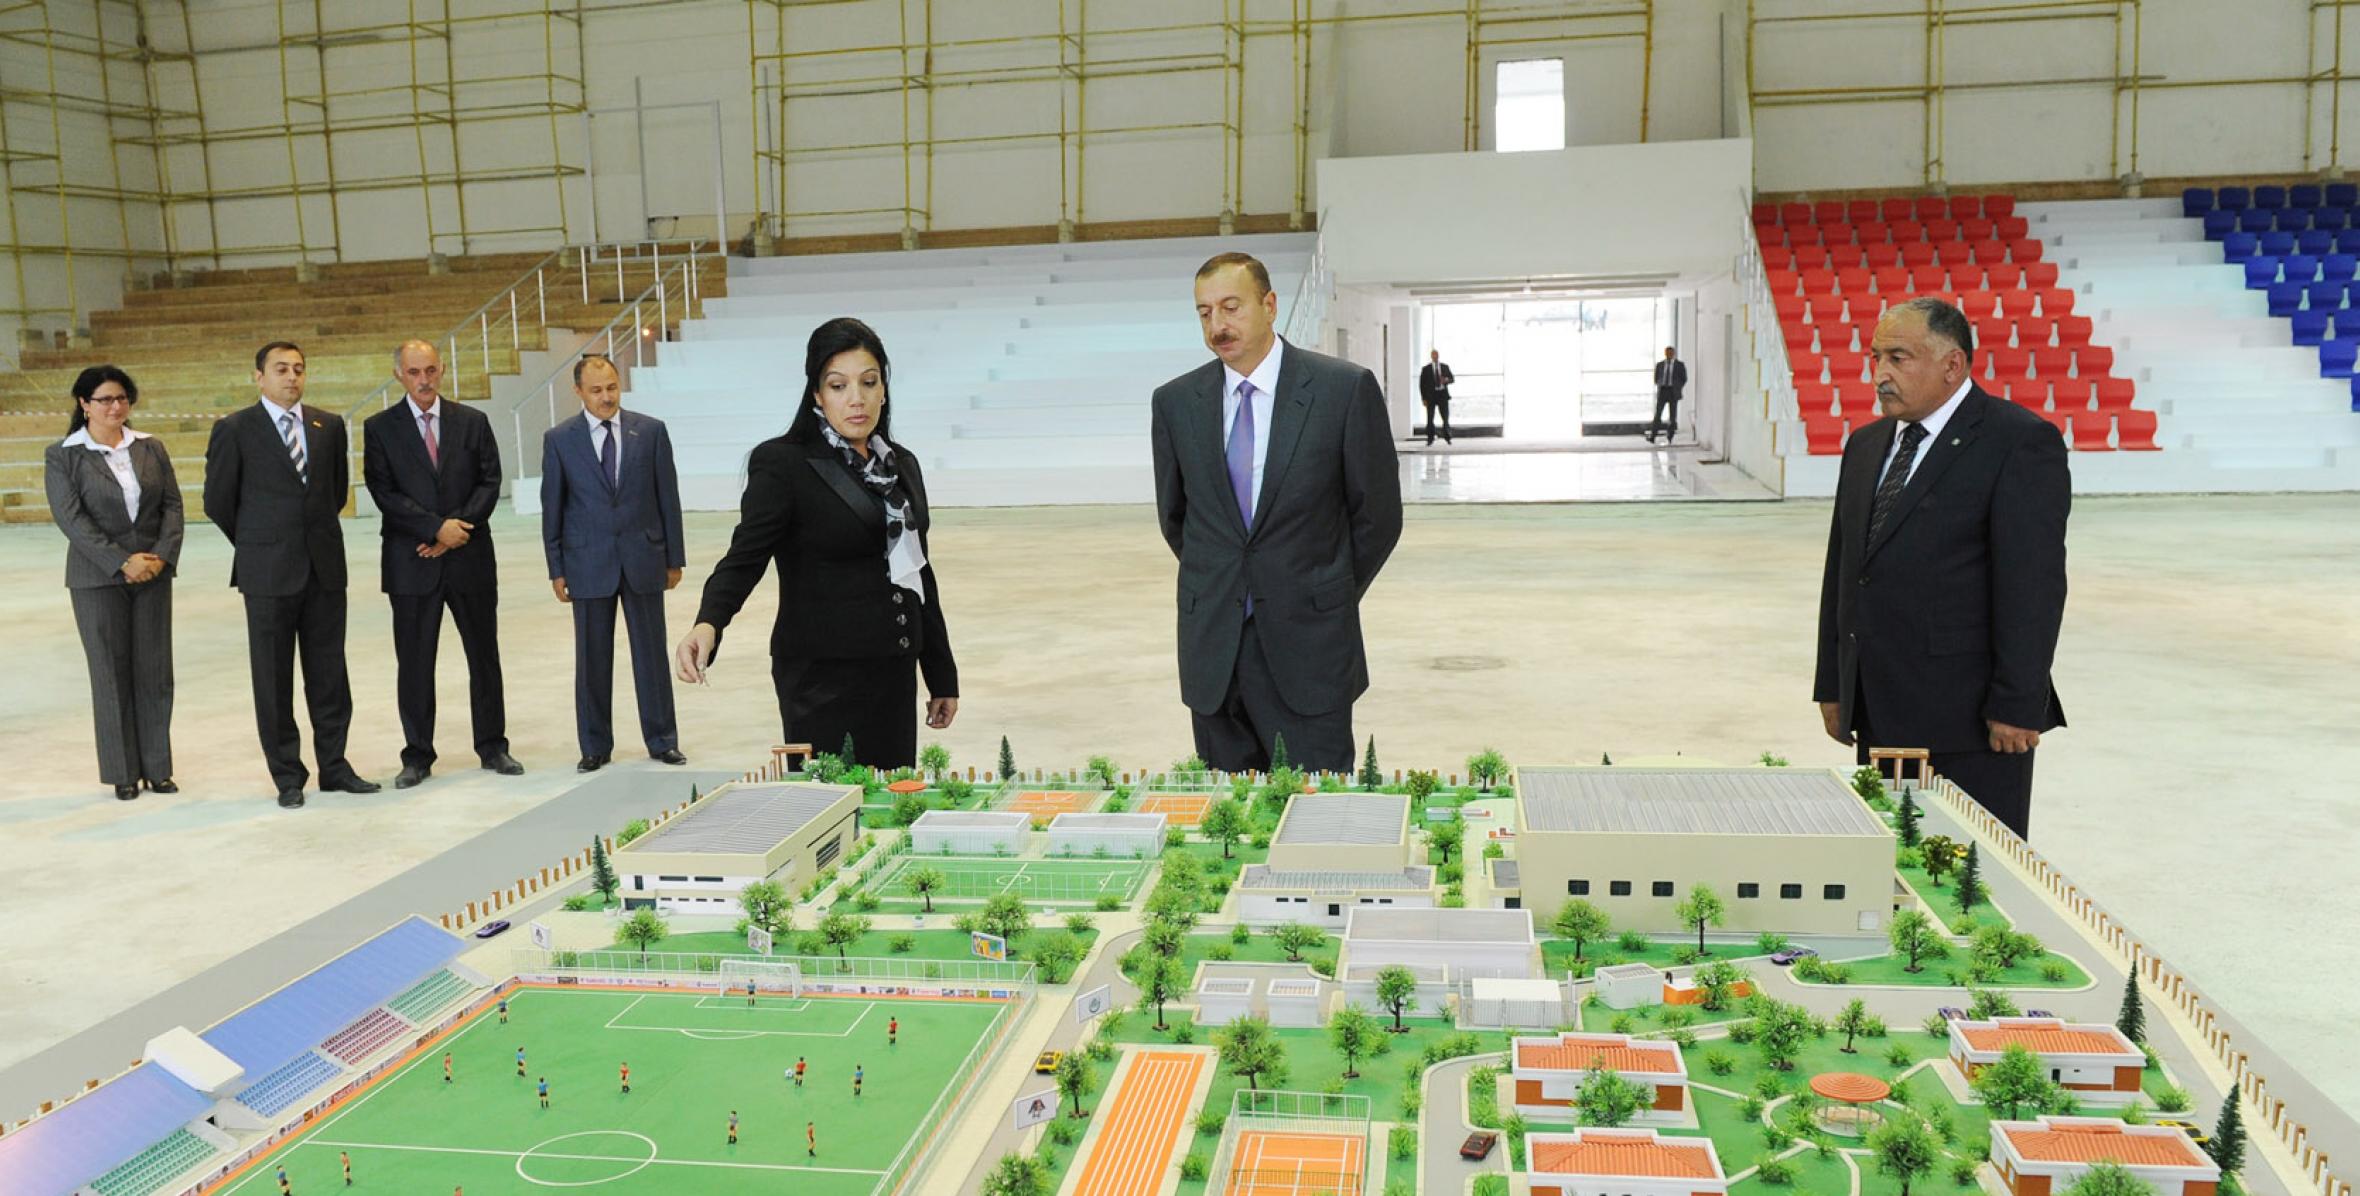 Ilham Aliyev reviewed progress of reconstruction at the Shamakhi Olympic Center